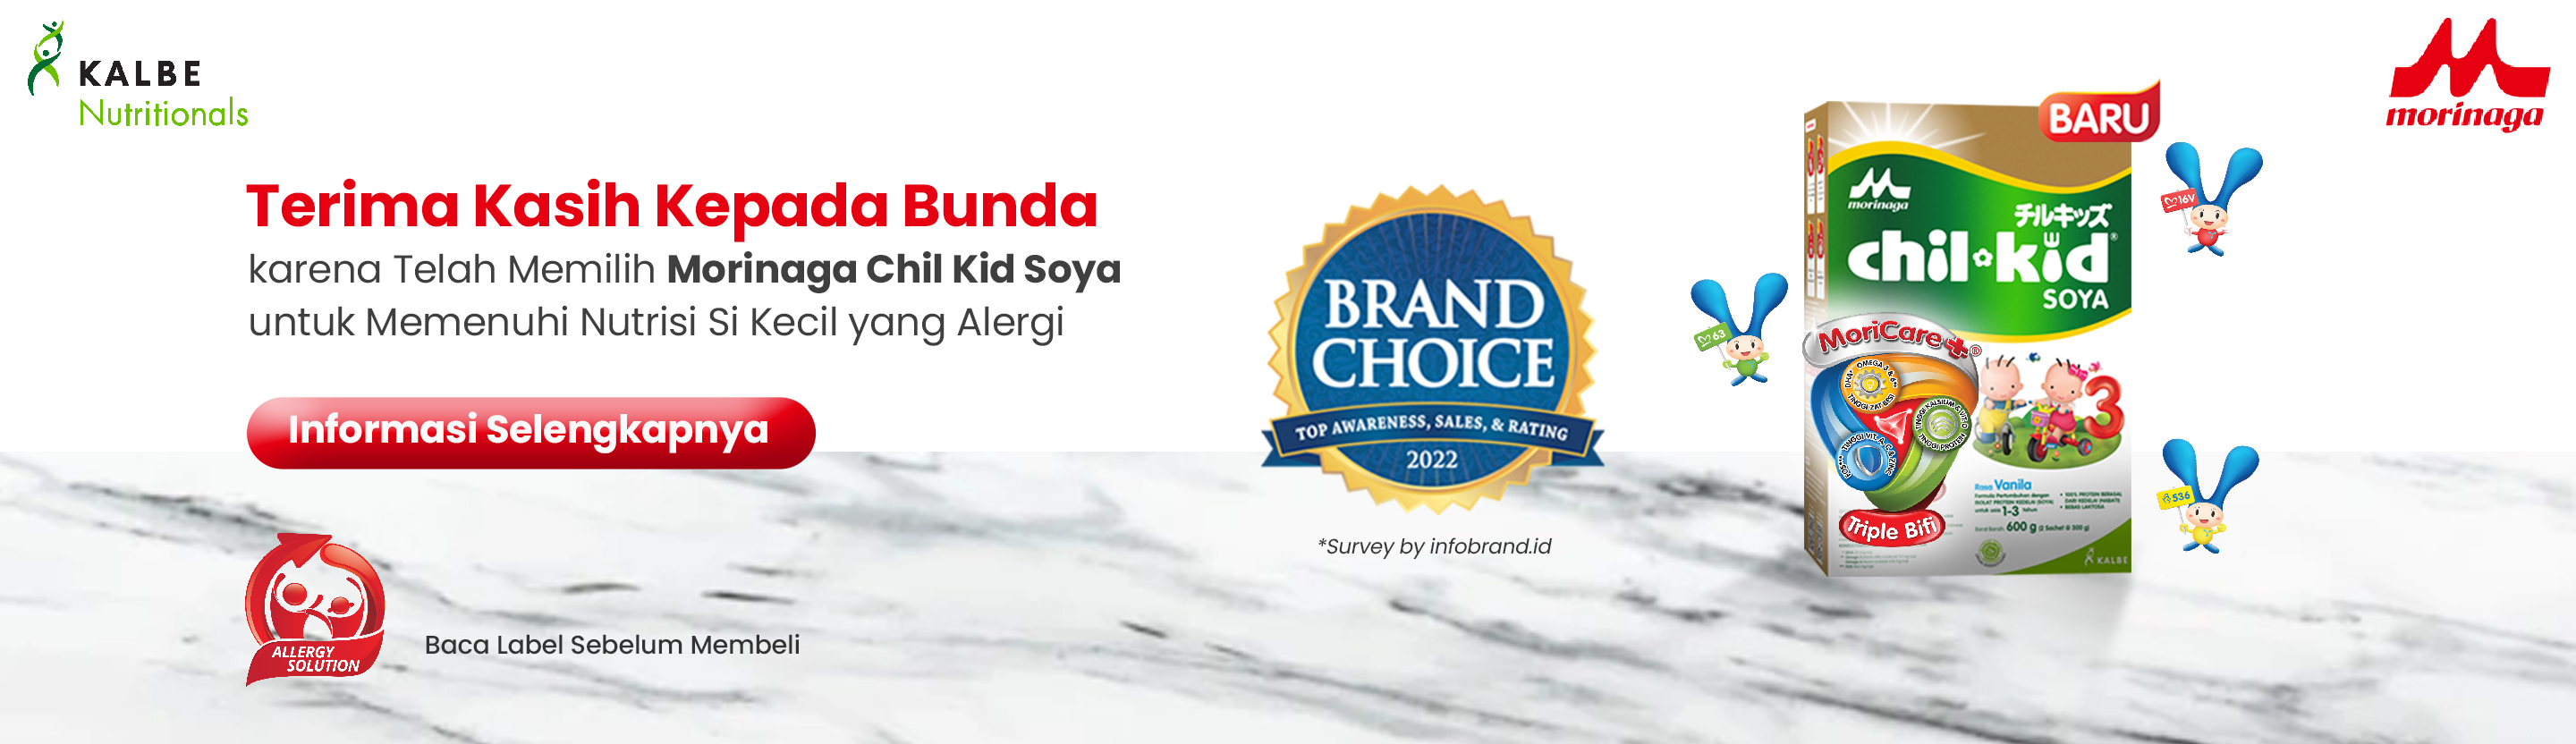 Morinaga Chil Kid Soya Brand Choice Awards 2022